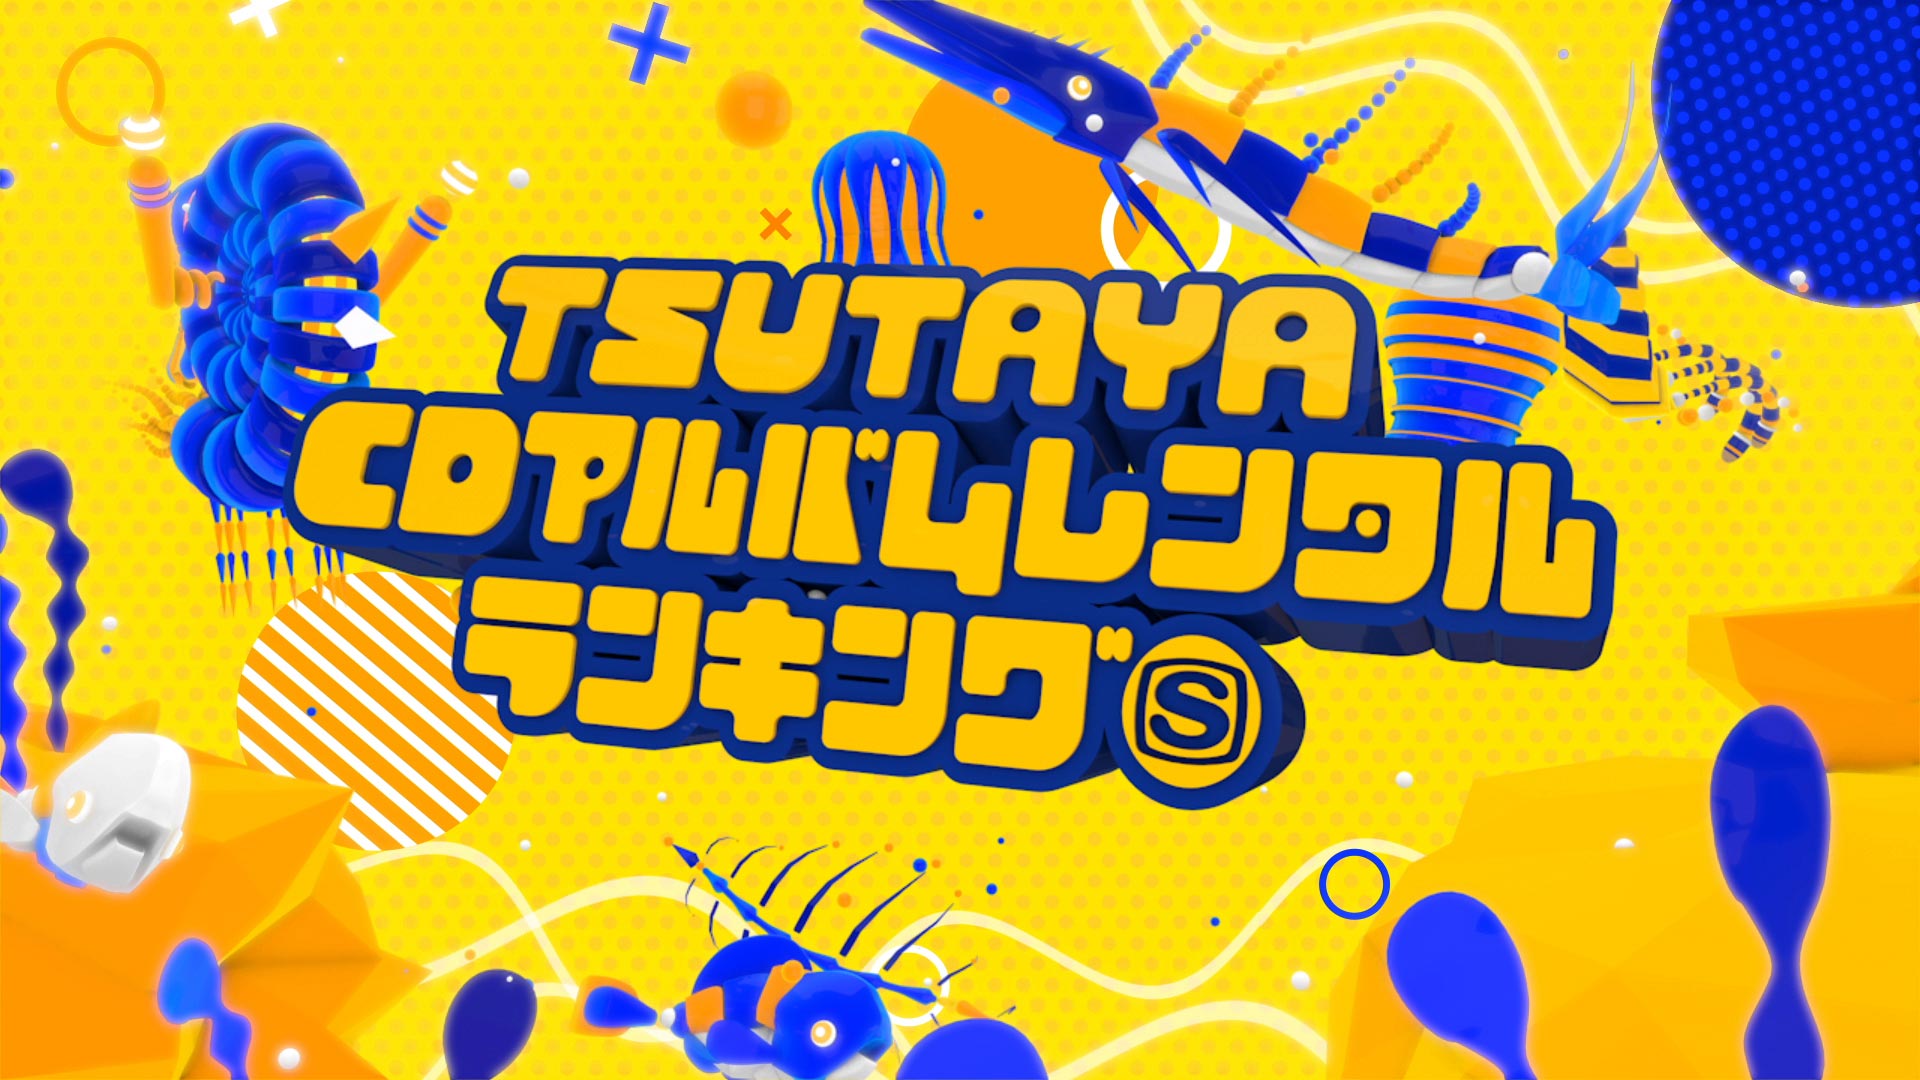 SPACE SHOWER TV「TSUTAYA CDアルバムレンタルランキング」